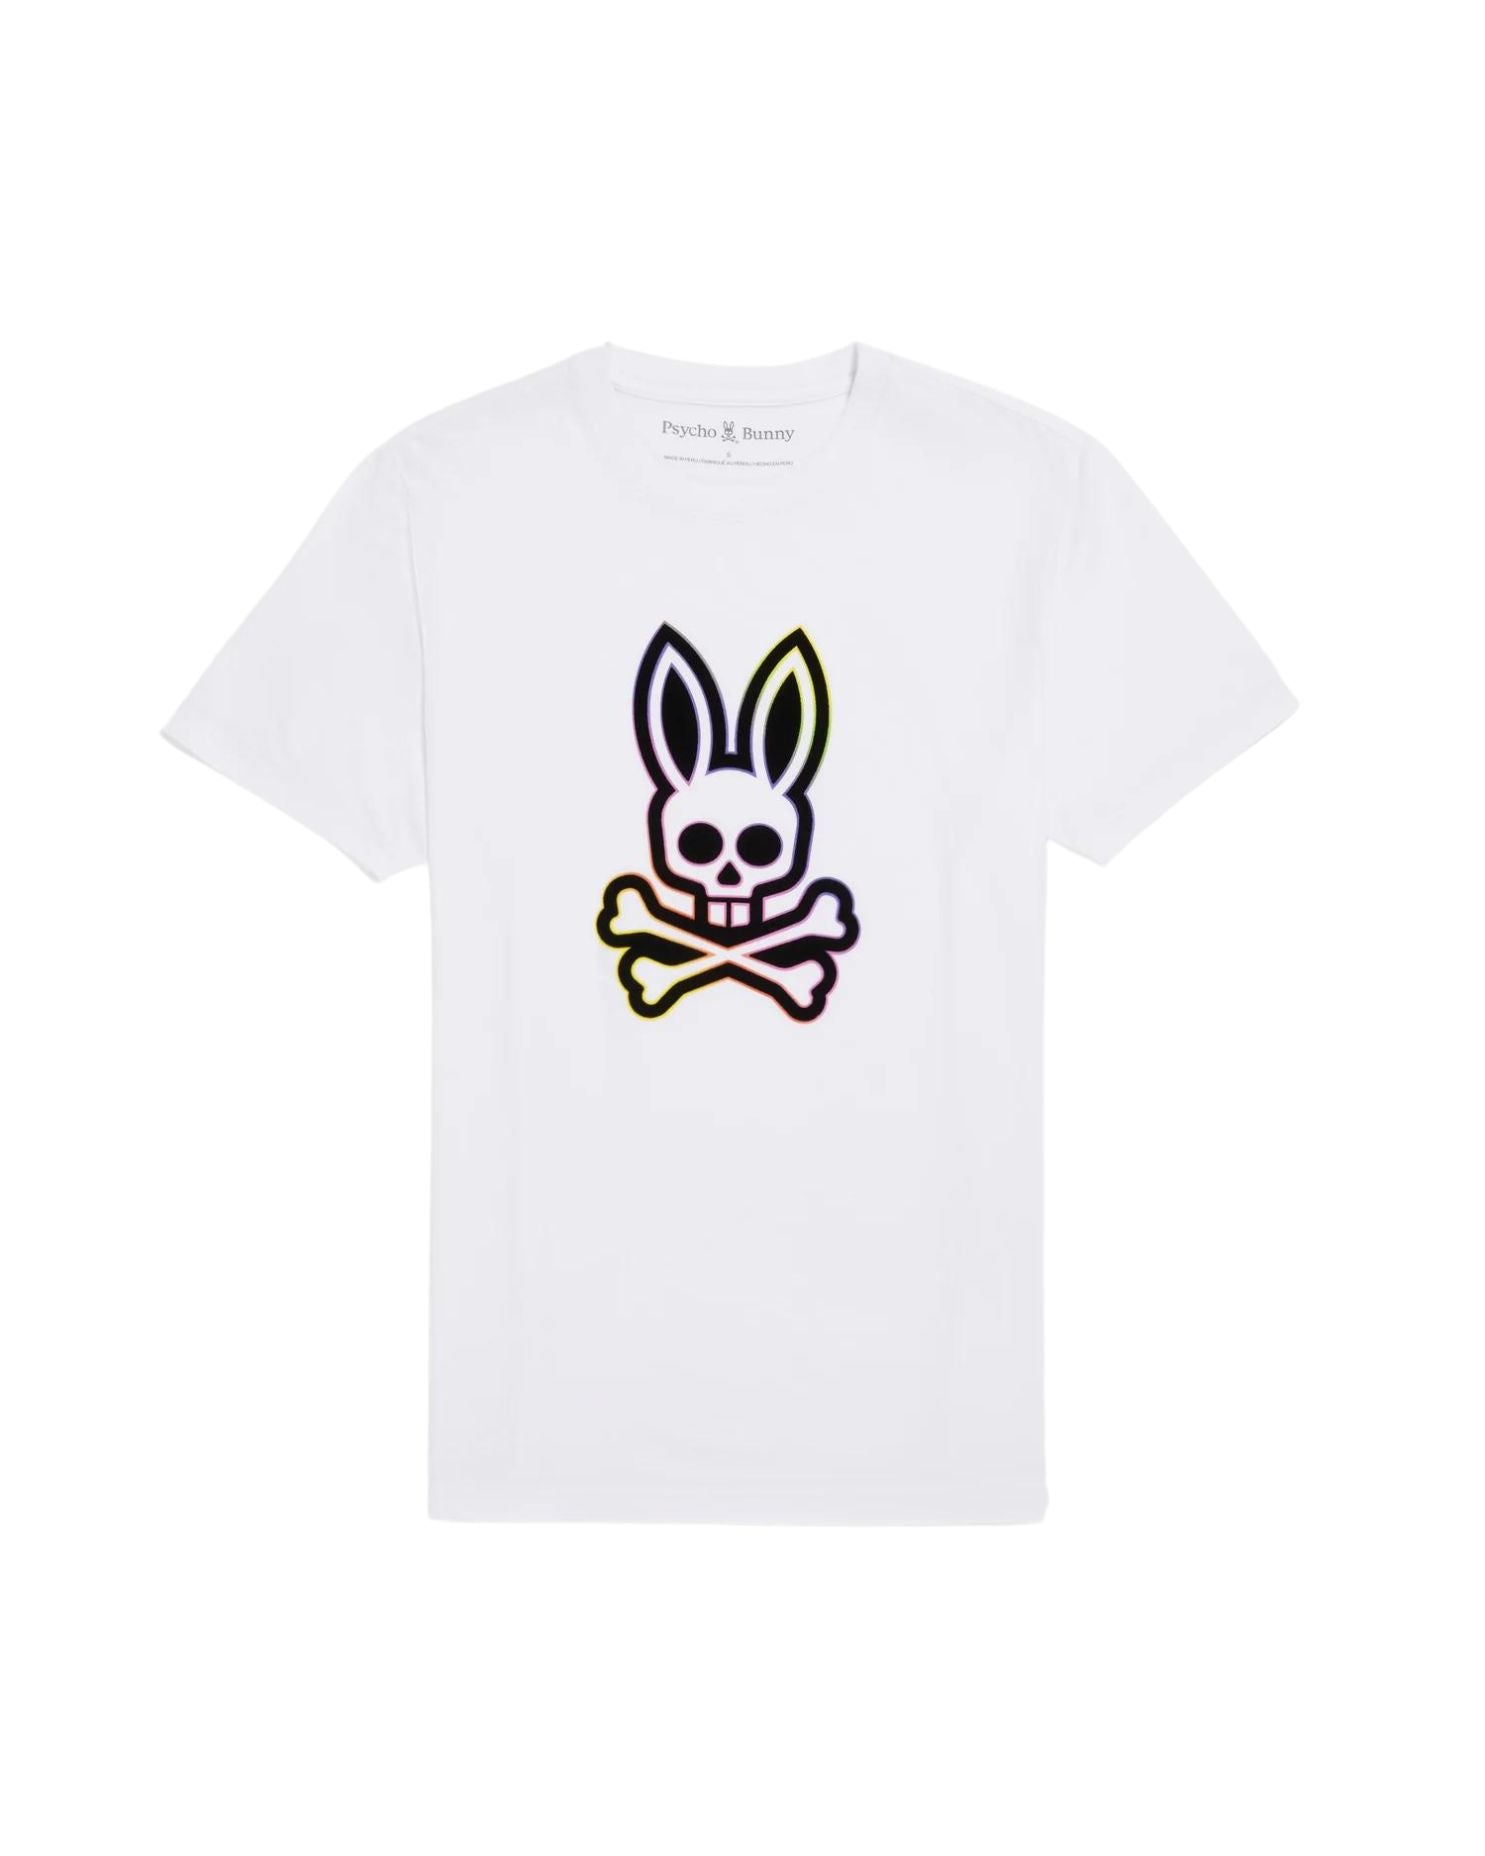 Psycho Bunny Flocking Logo T Shirt Black